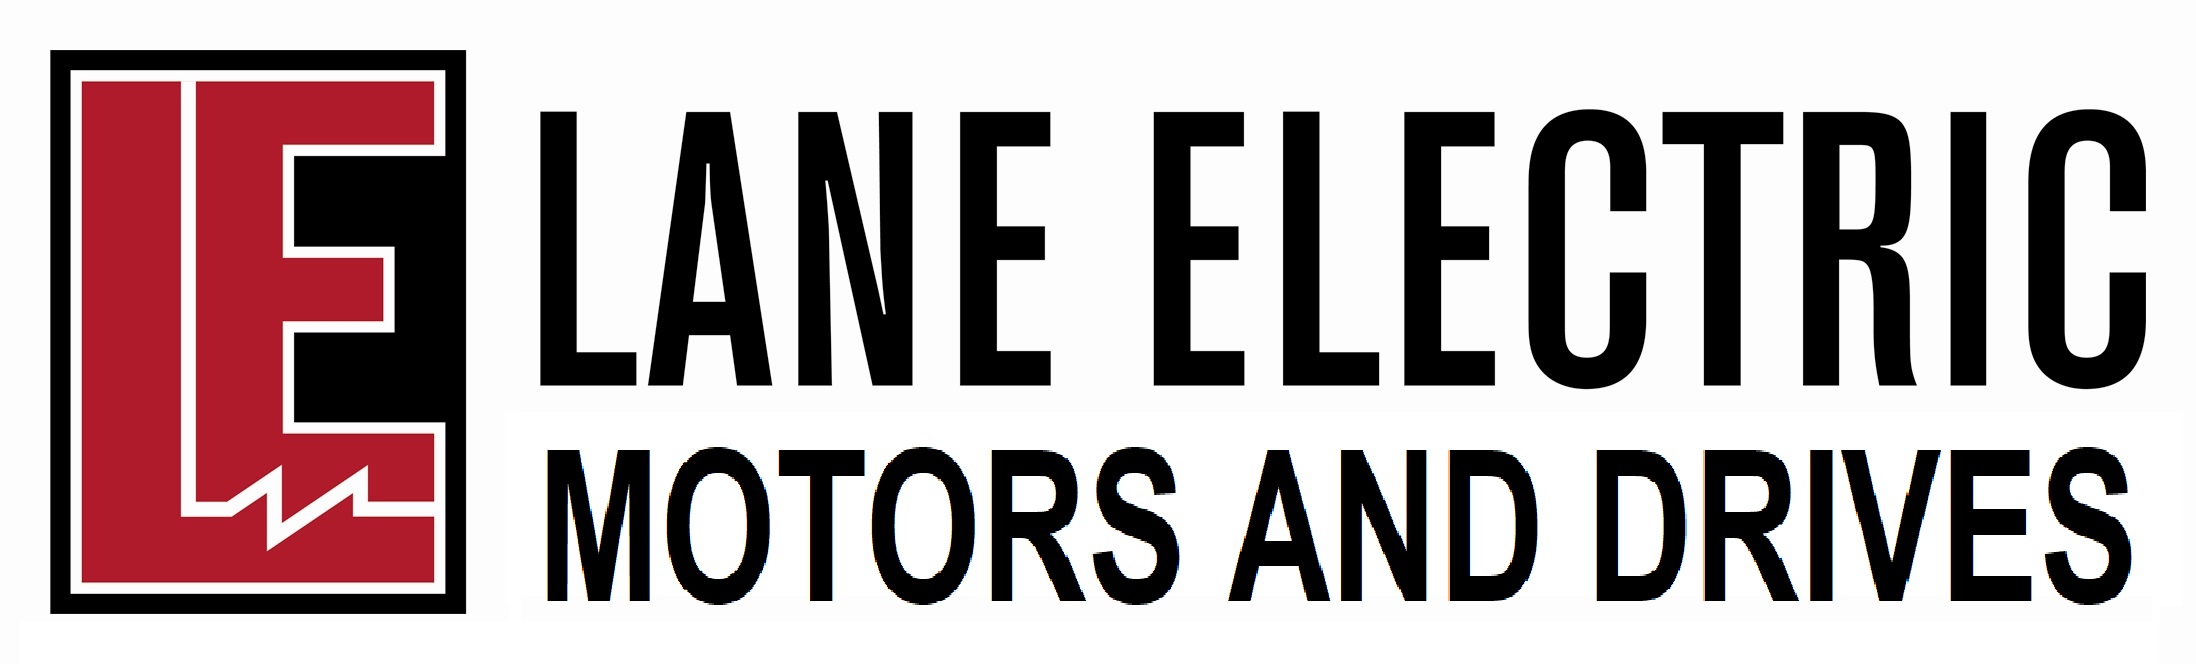 Lane Electric, Inc.'s Image